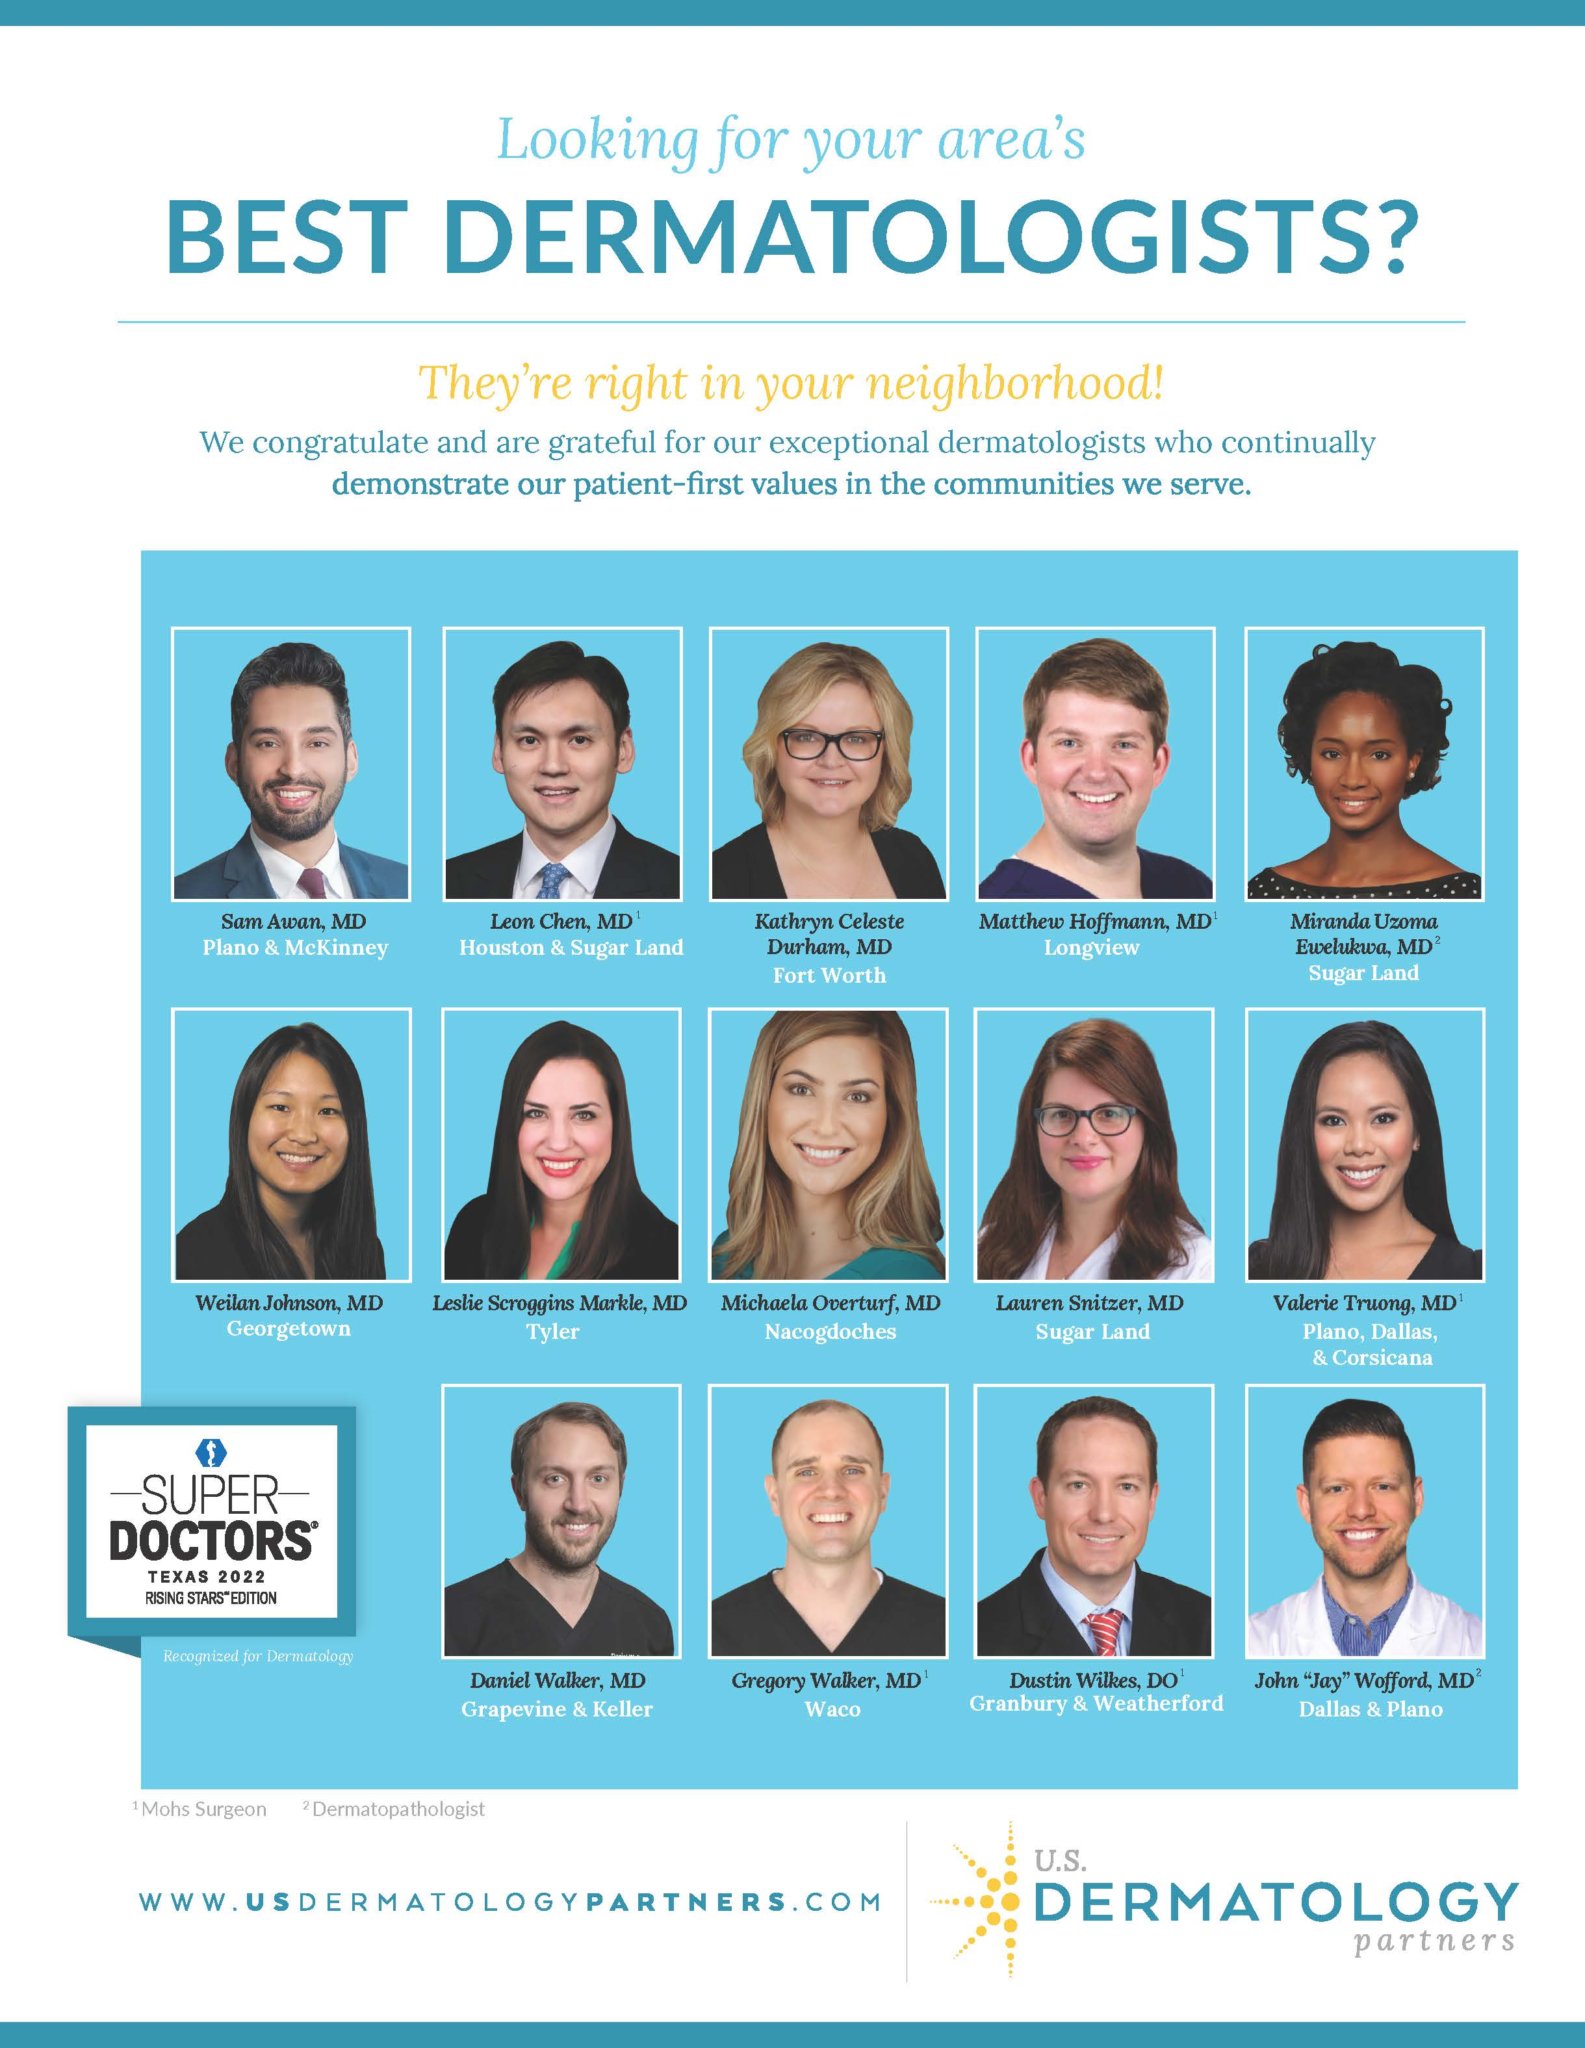 Texas Monthly Super Doctors 2022 U.S. Dermatology Partners